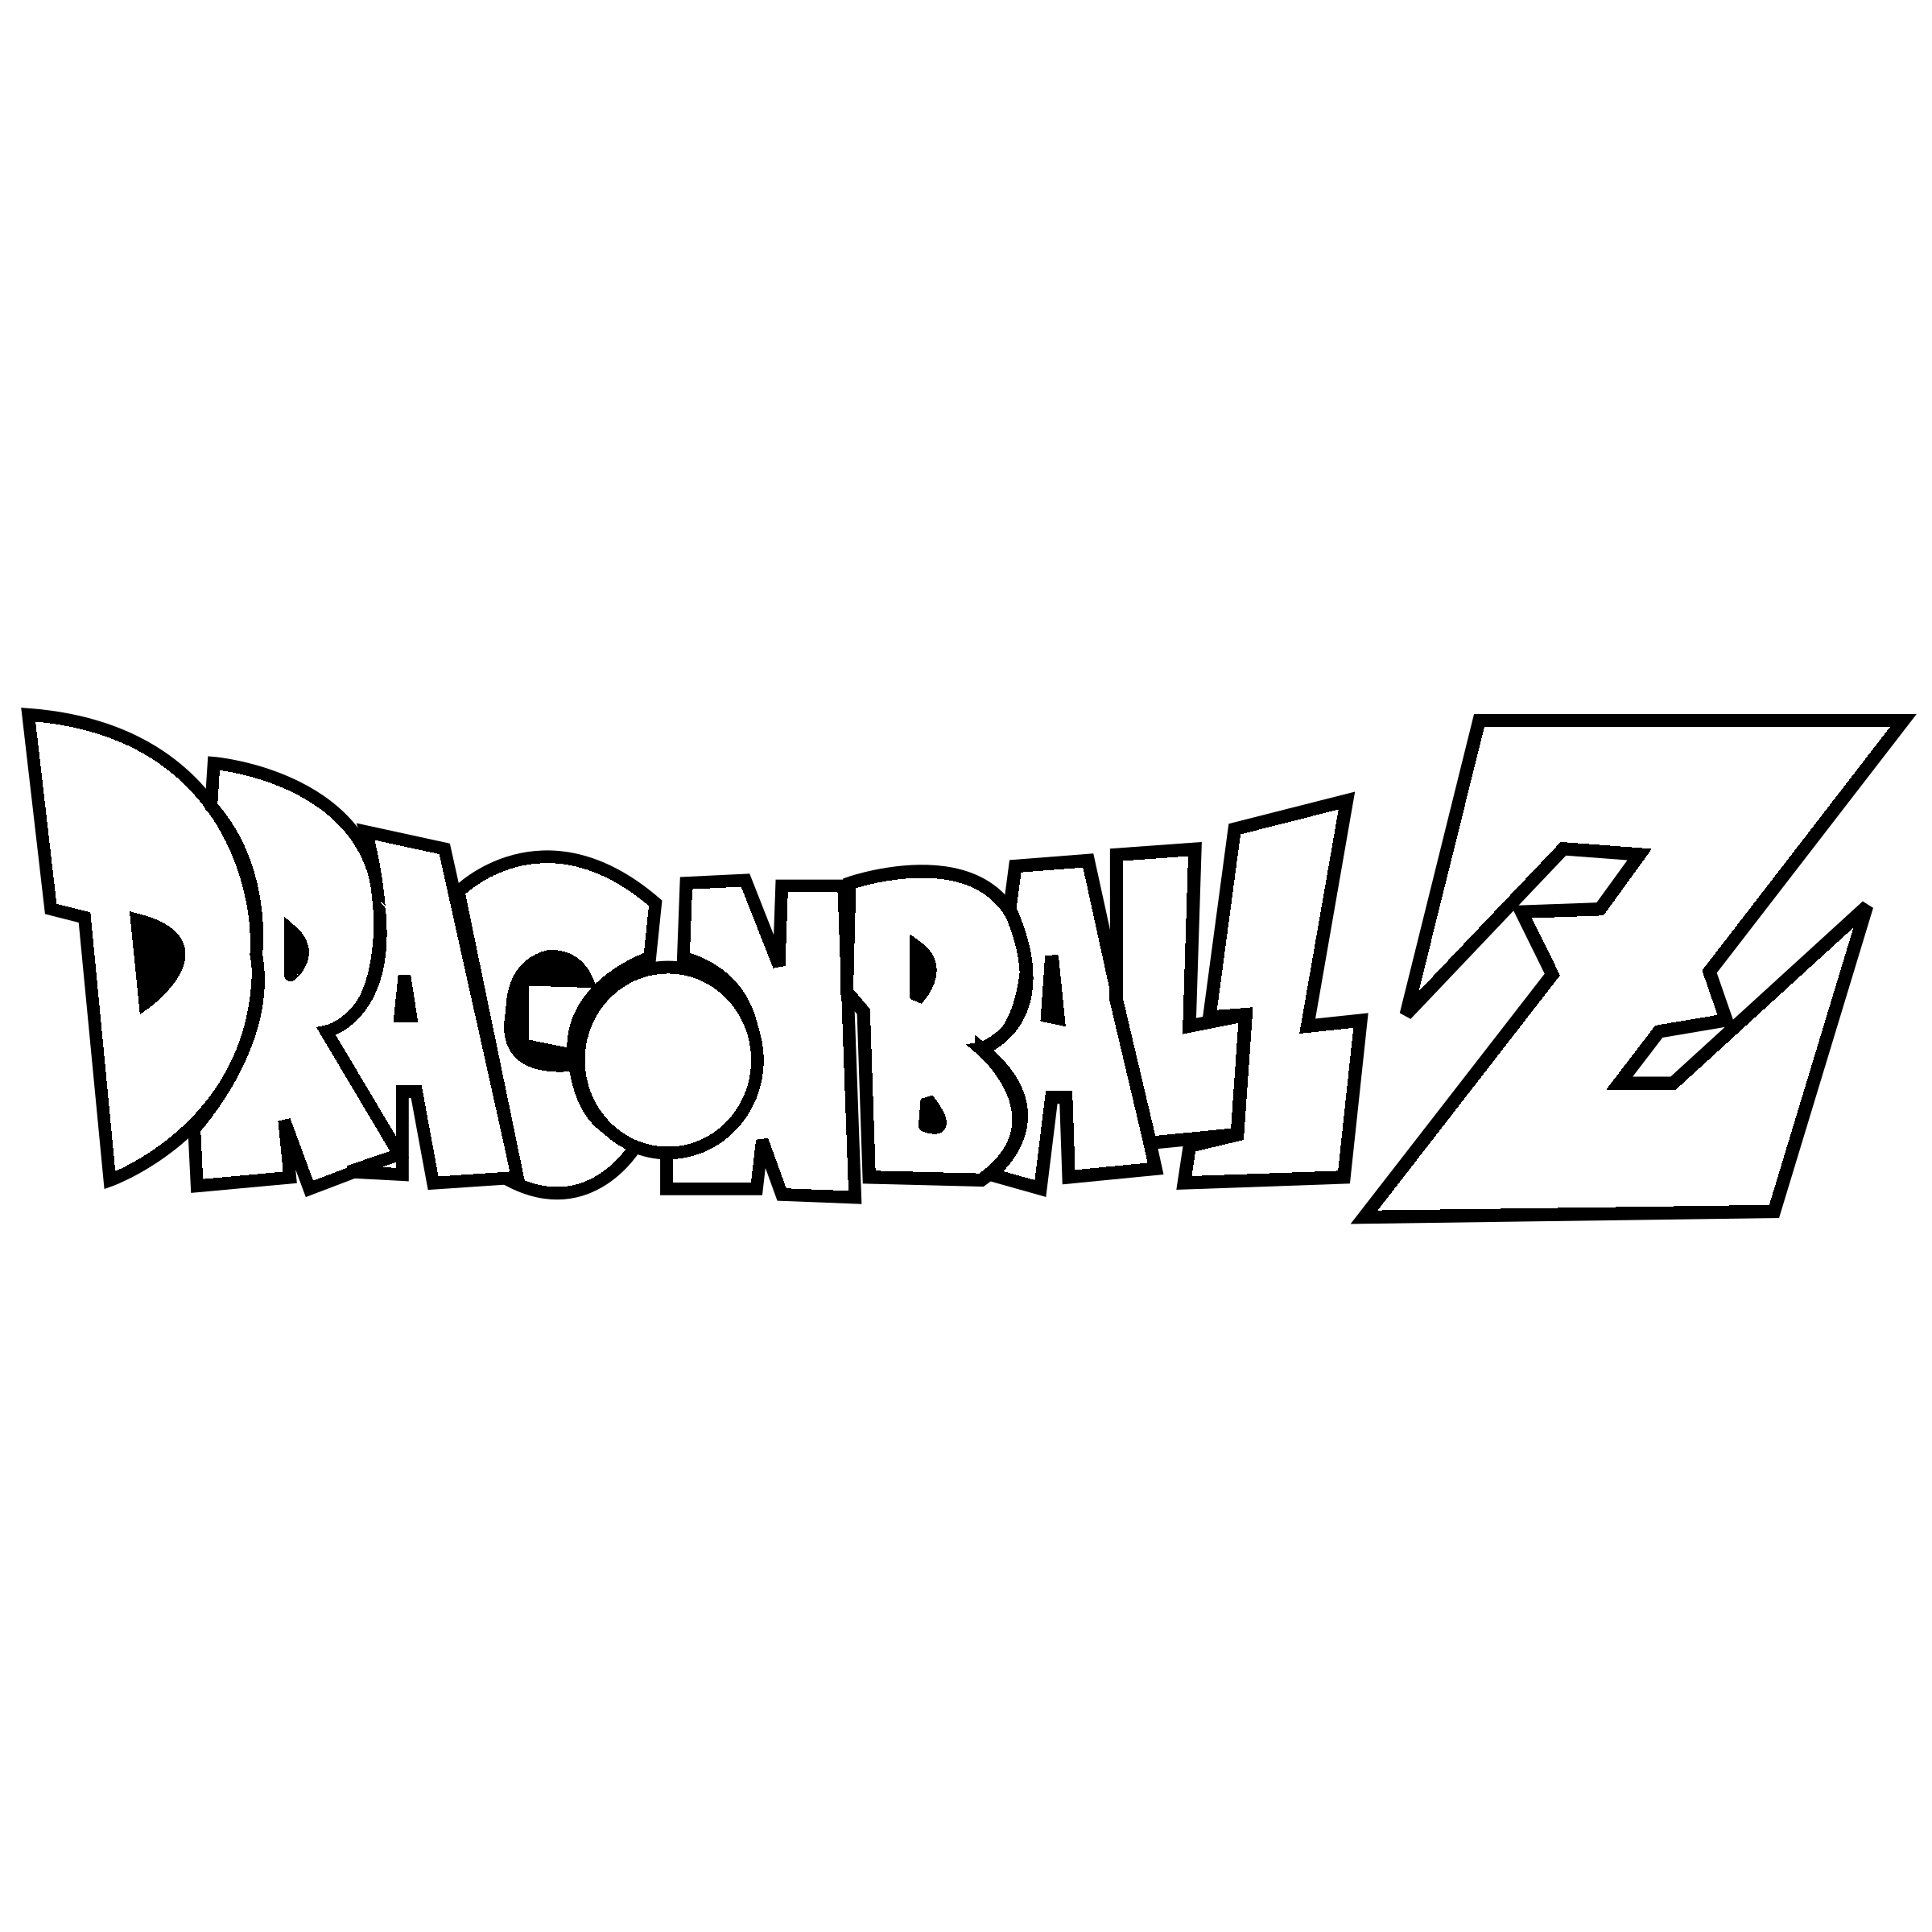 White Z Logo - DragonBall Z Logo PNG Transparent & SVG Vector - Freebie Supply